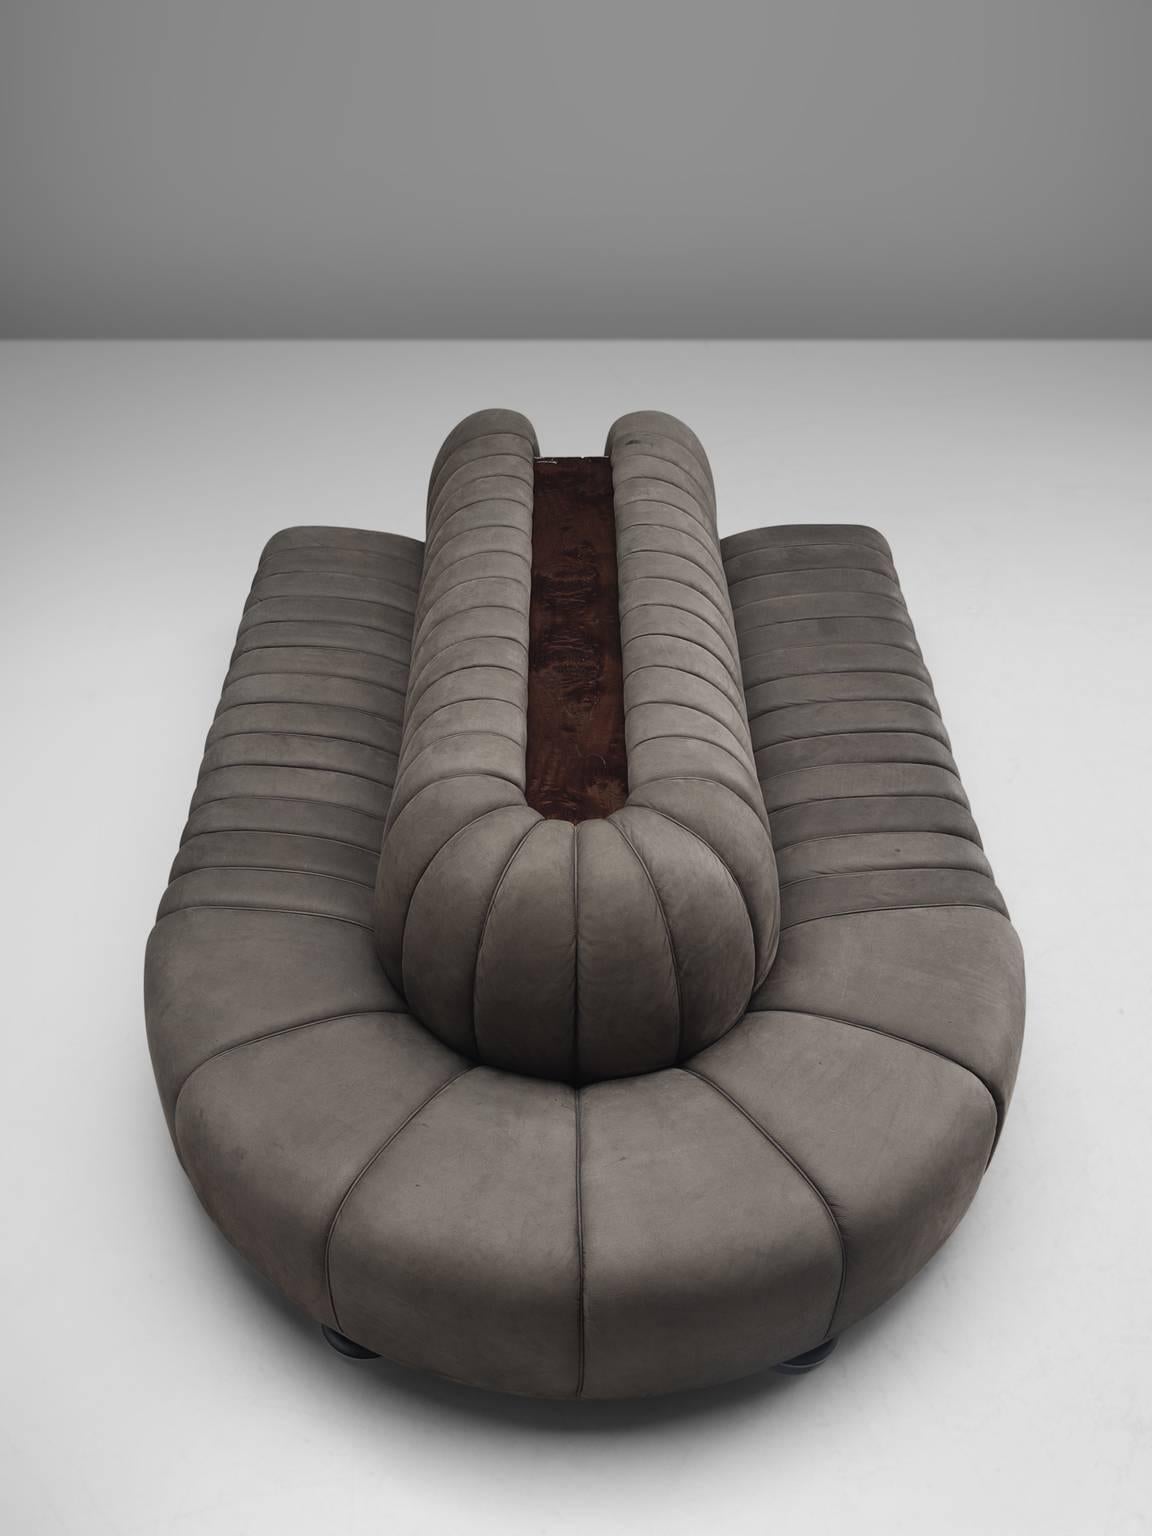 Custom-Made Luxurious Wittmann Sofa in Anthracite Leather (Ende des 20. Jahrhunderts)